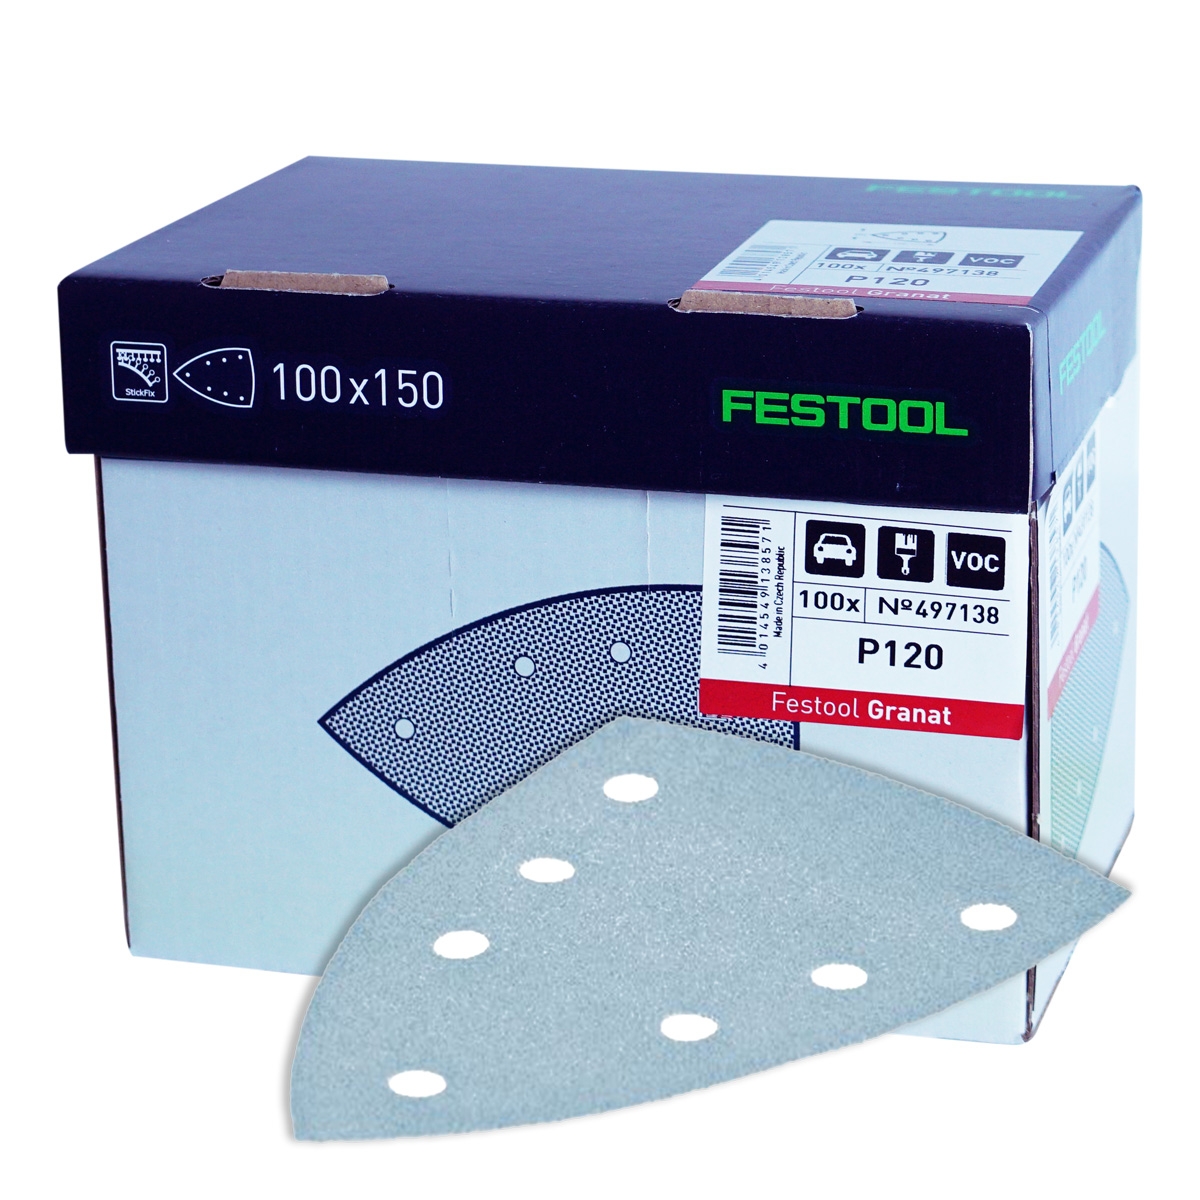 Festool Brilliant 2 Delta Triangle Sandpaper Sheet DTS 100 x 150mm